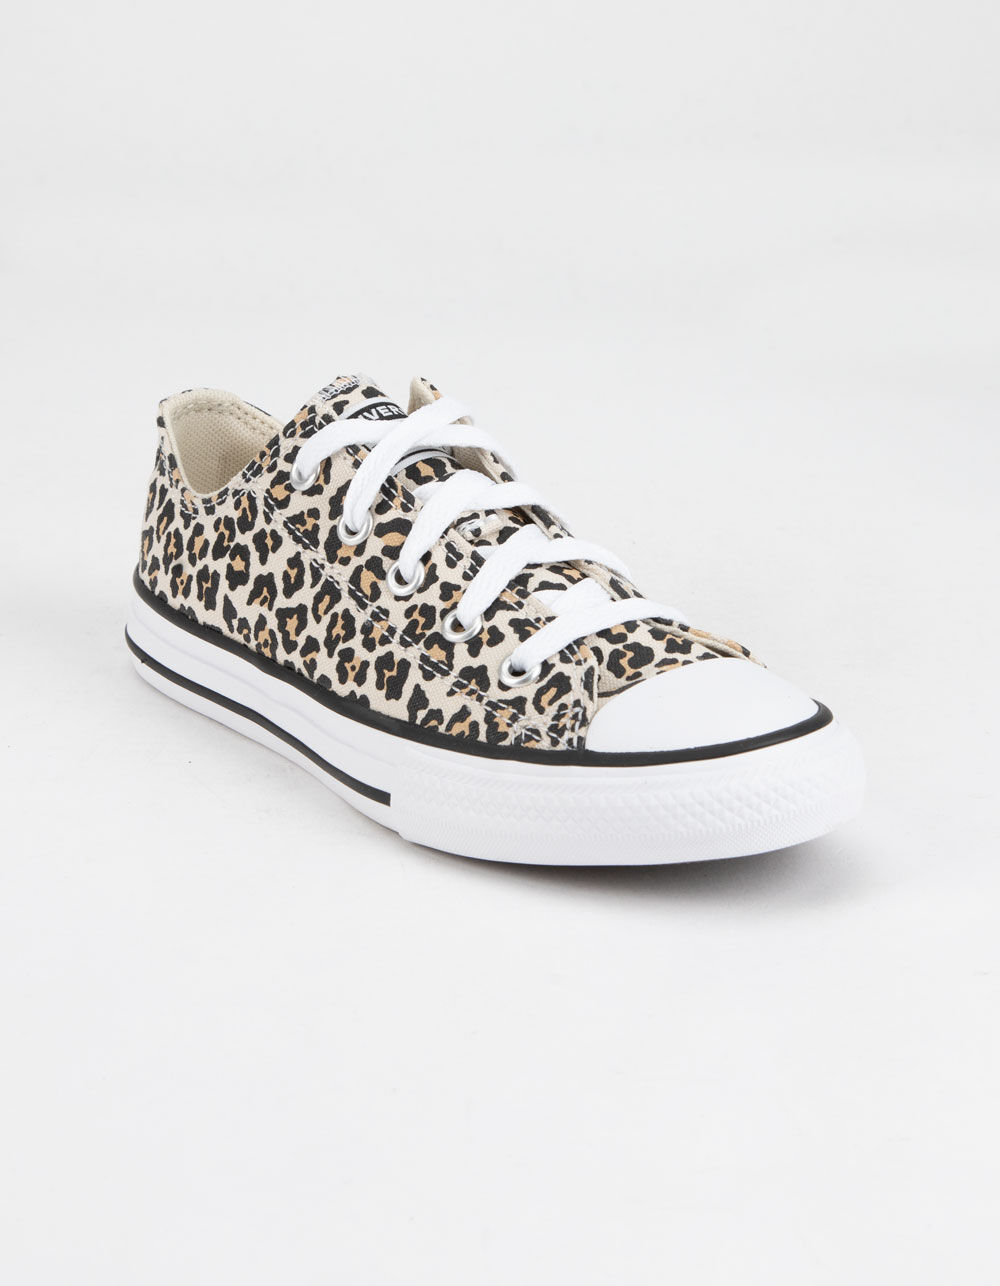 CONVERSE Chuck Taylor All Star Leopard Print Low Top Girls Shoes - LEOPARD  | Tillys